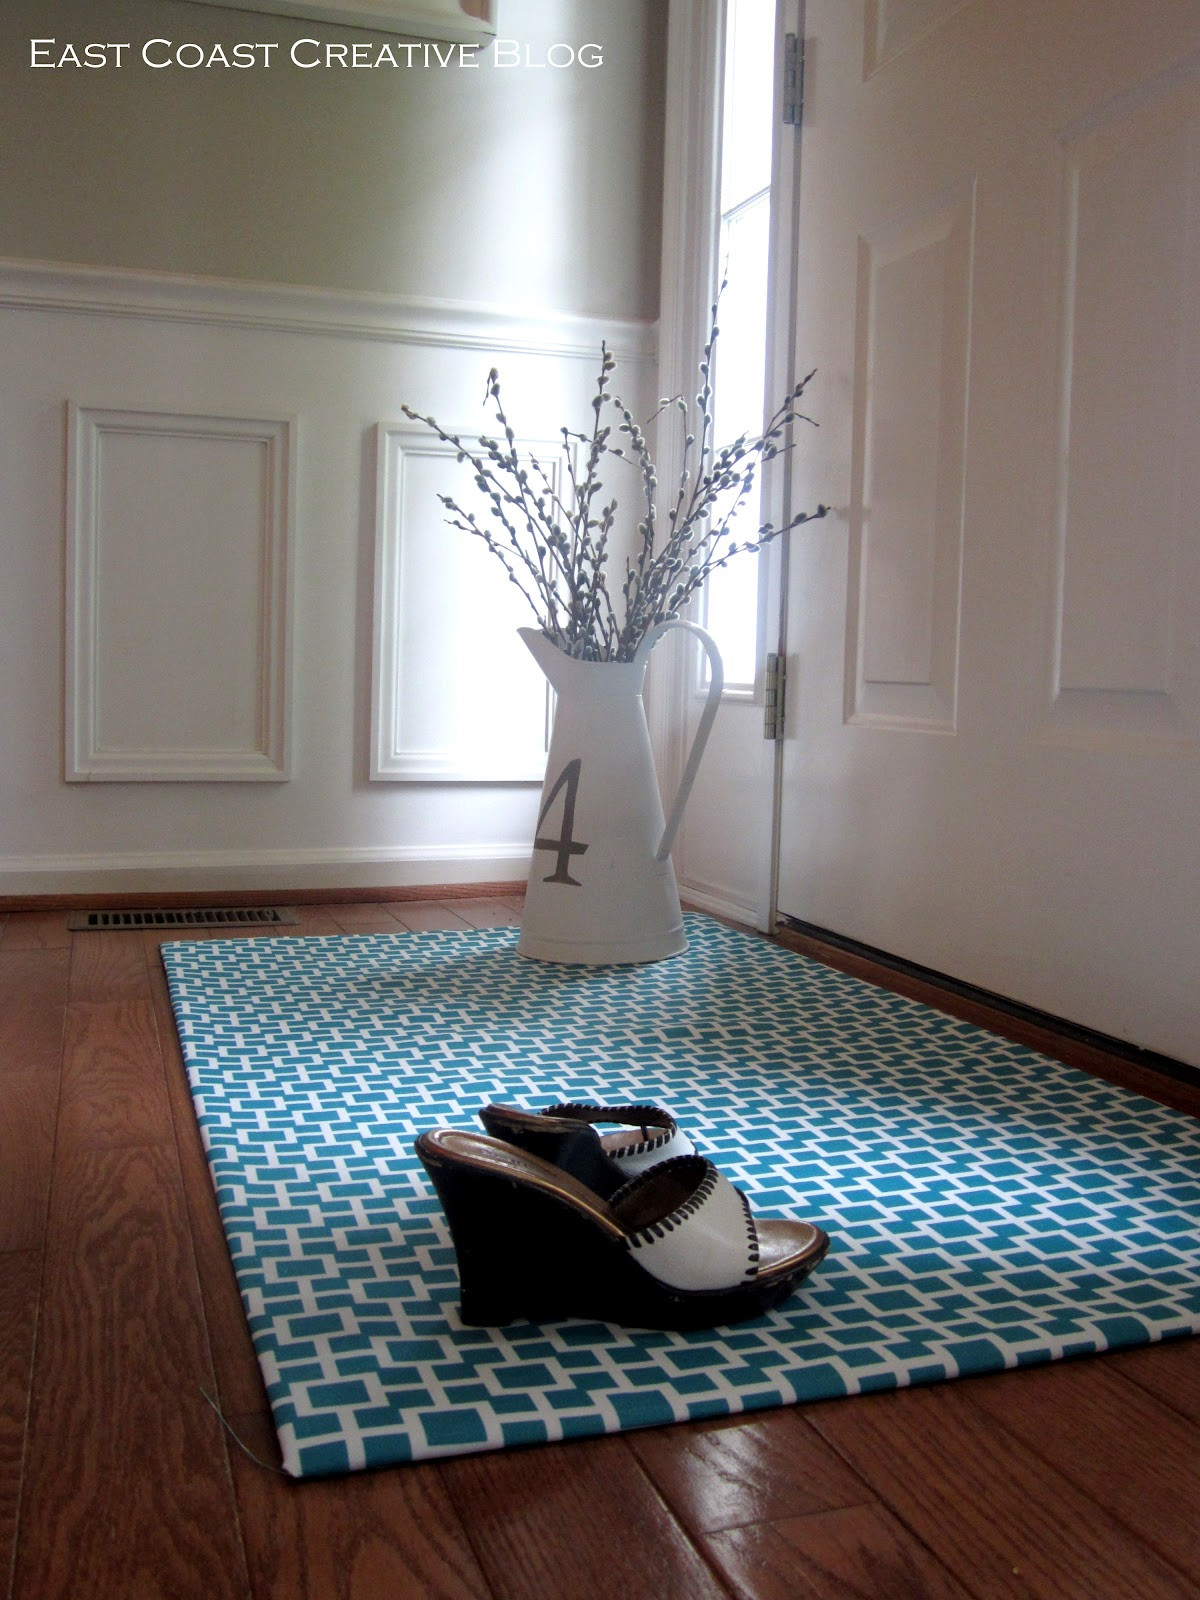 Best ideas about DIY Floor Mats
. Save or Pin DIY Fabric Floor Cloth Floor Mat Now.